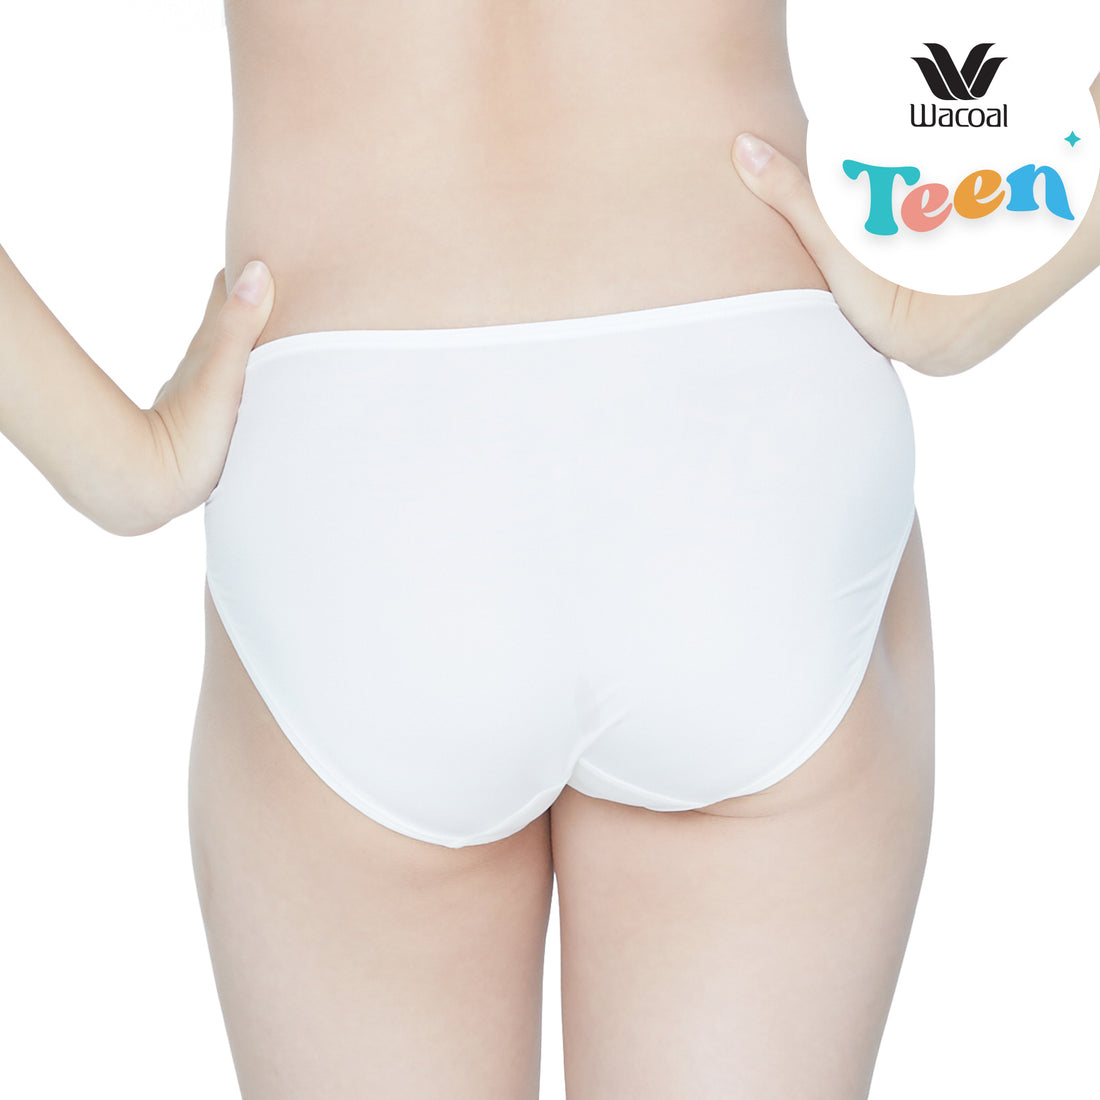 Wacoal Teen Bikini Panty กางเกงในสำหรับวัยใส รุ่น MUT302 สีครีม (CR)